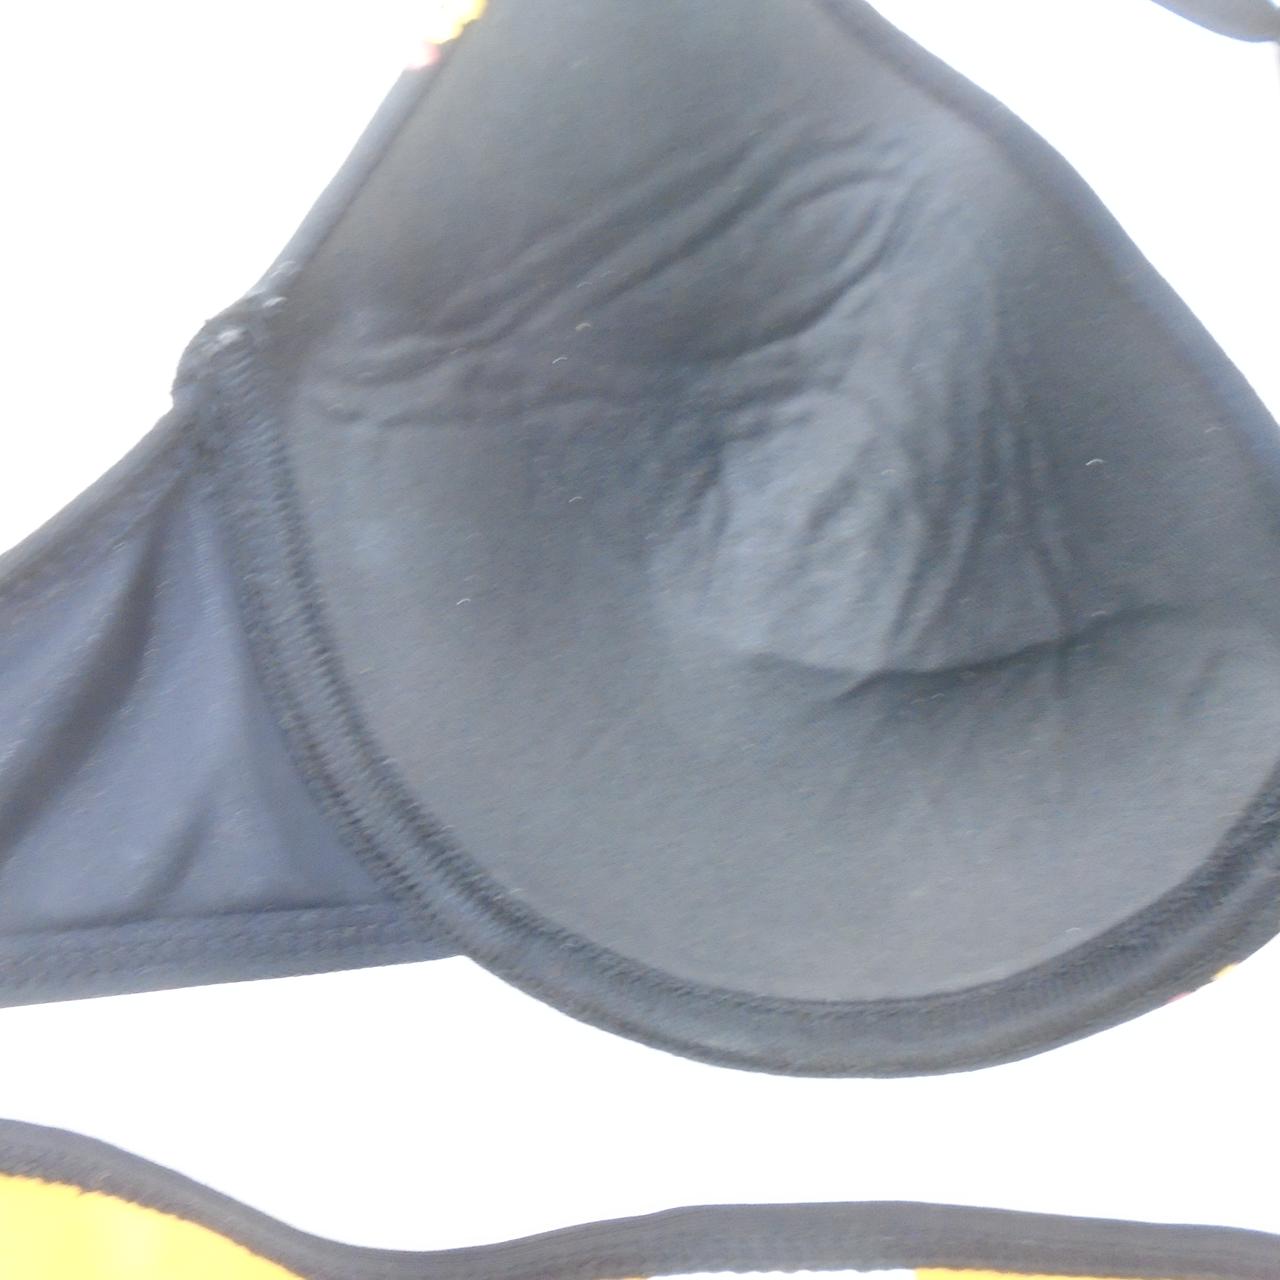 Women's Swimsuit Admas. Black. L. Used. Good